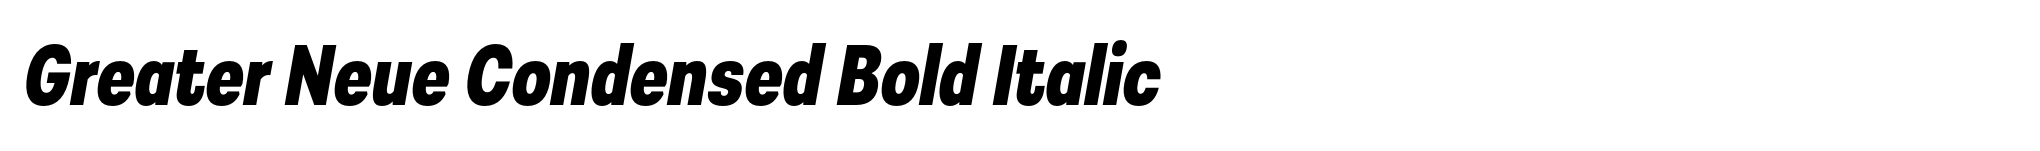 Greater Neue Condensed Bold Italic image